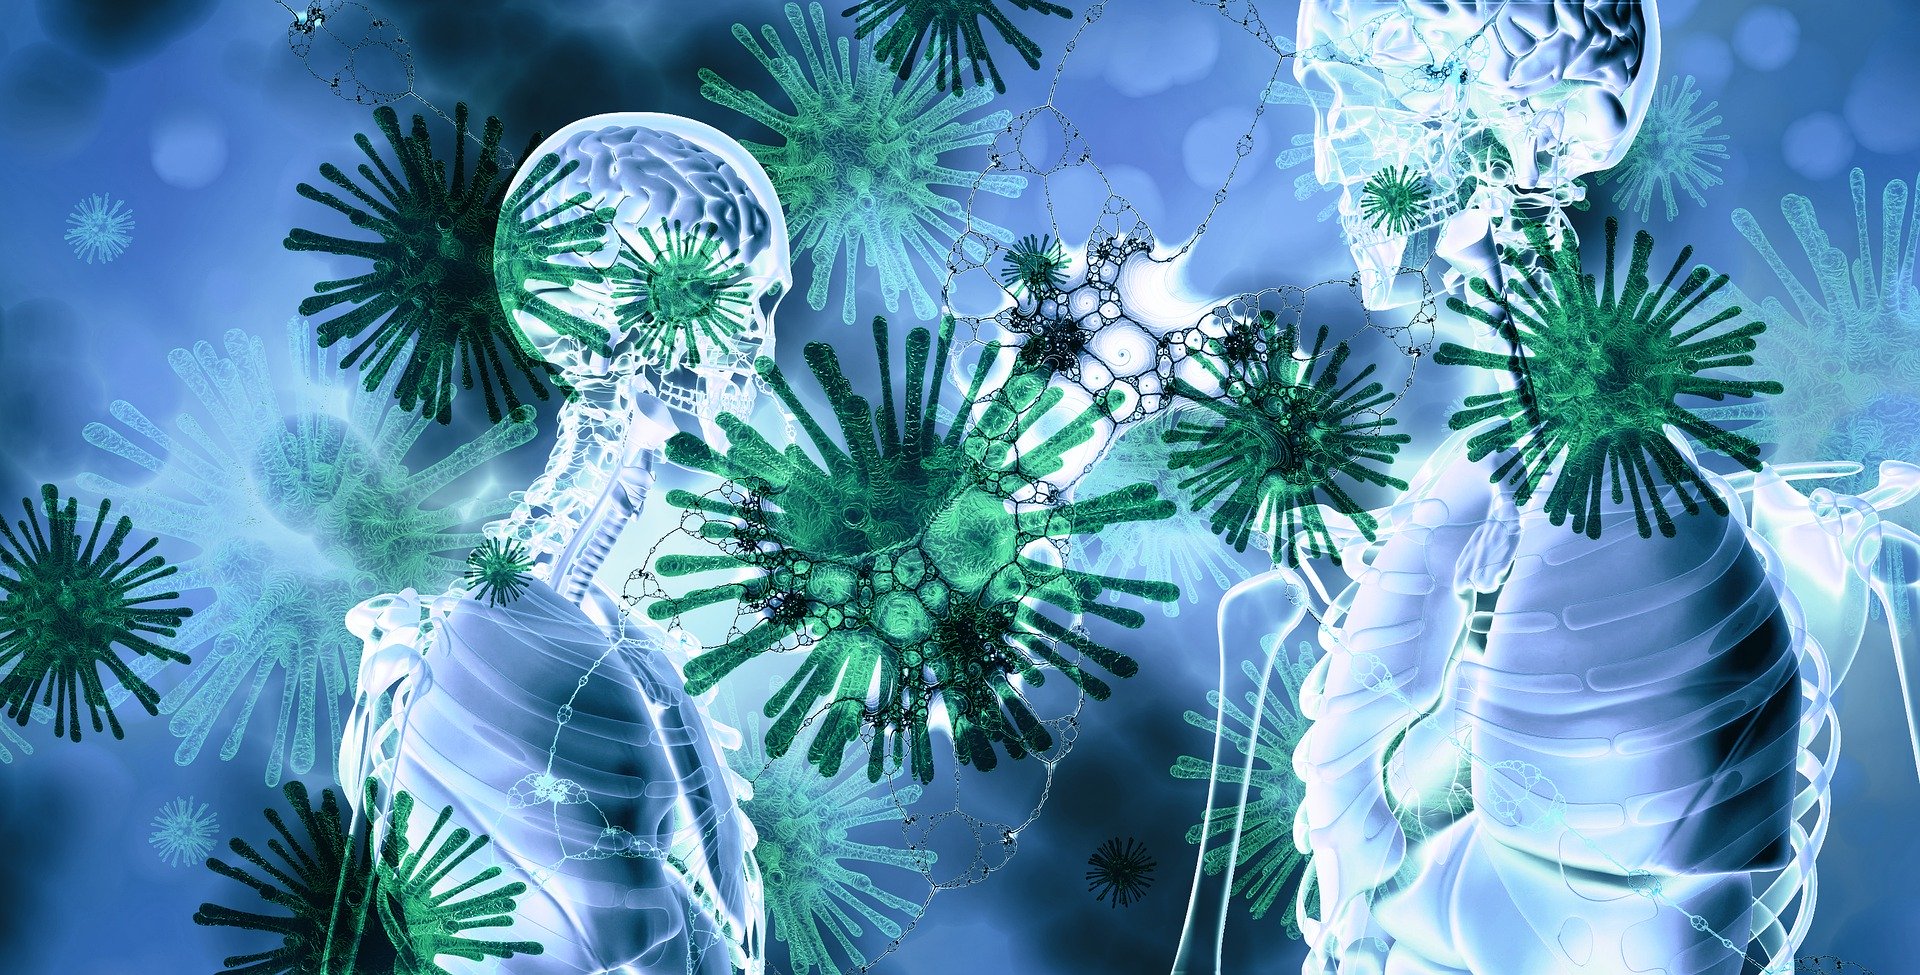 Bildquelle: Symbolbild Coronavirus. Image by Gerd Altmann from Pixabay